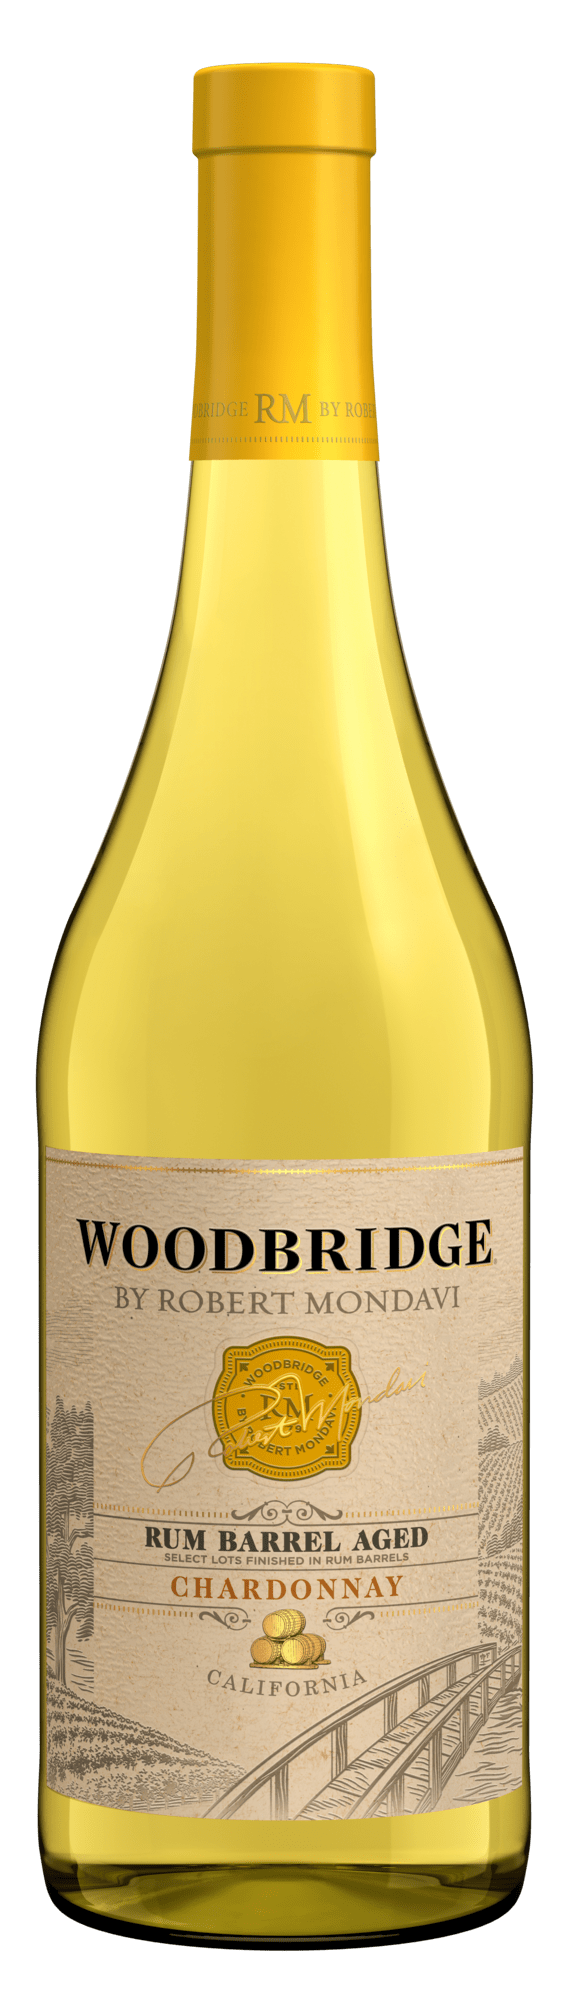 Woodbridge Rum Barrel Aged Chardonnay - Barbank